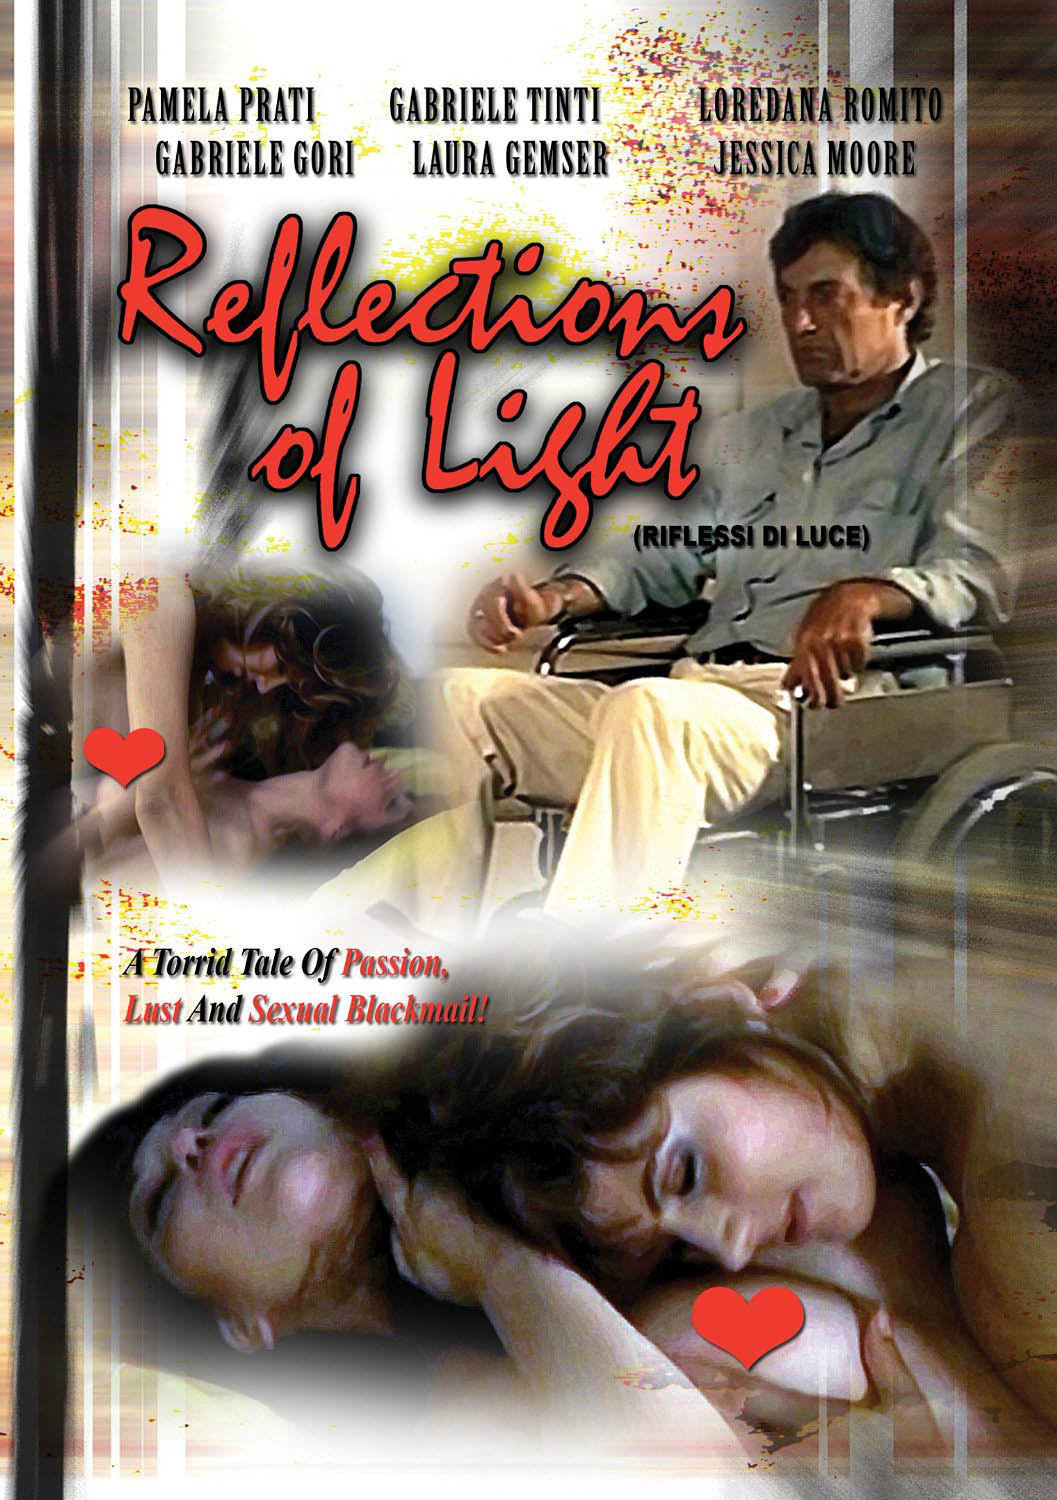 Reflections of Light (1988) Screenshot 2 